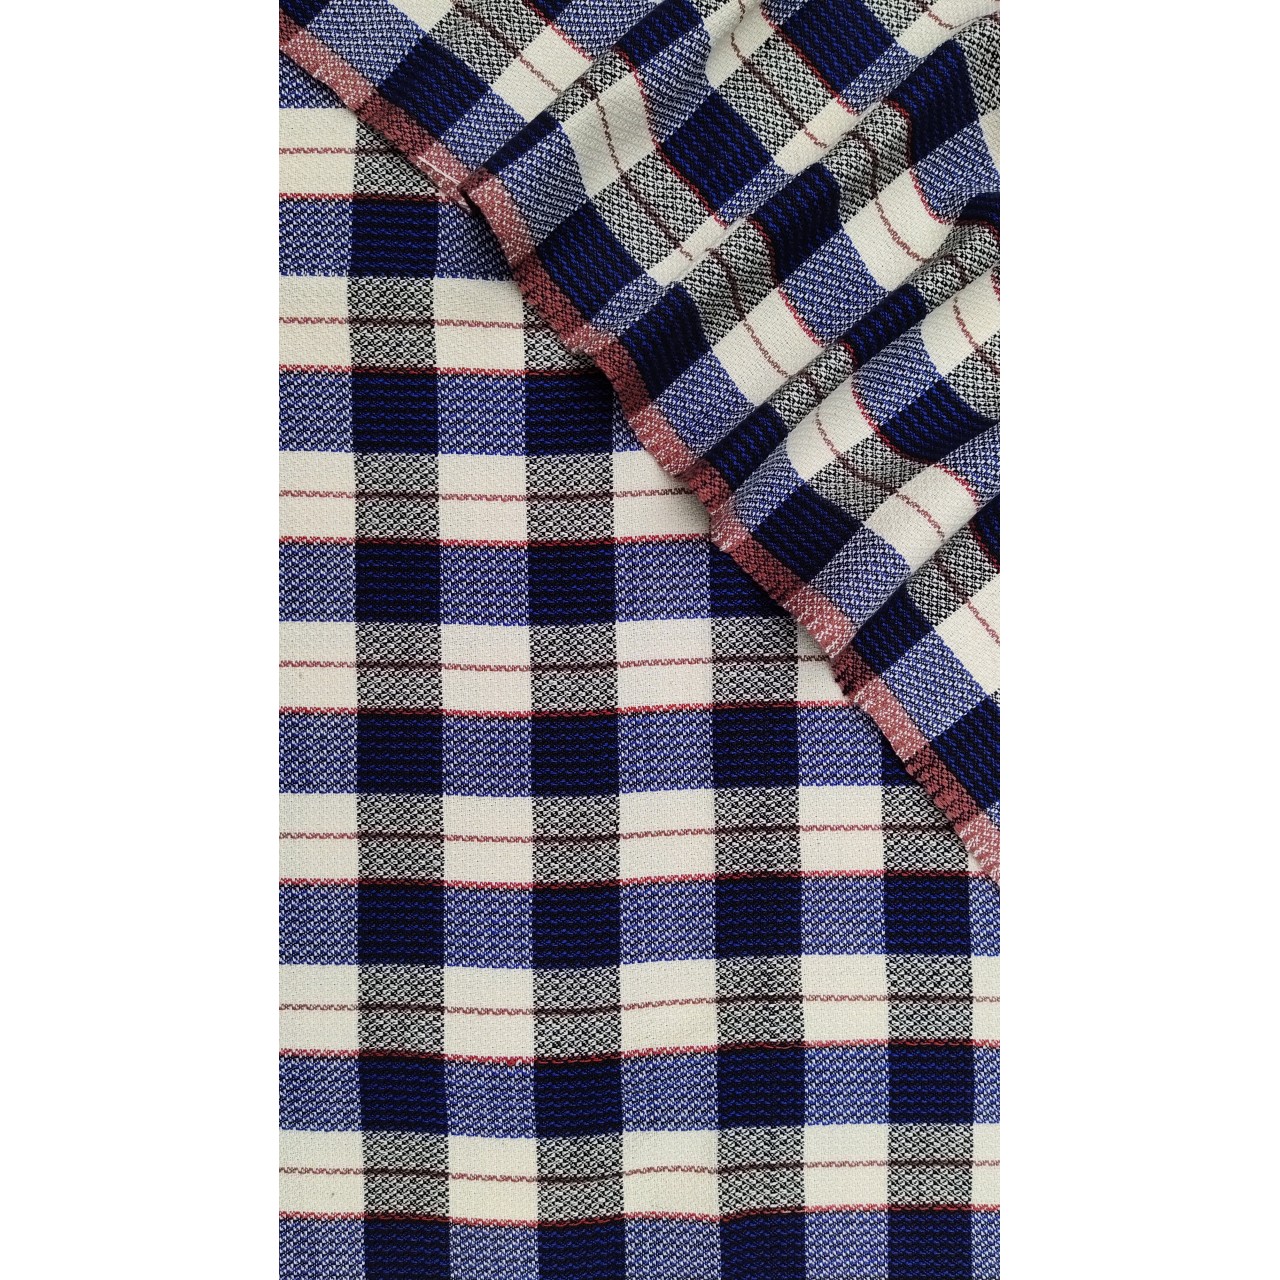 (135) Cotton Azo free dyed yardage from Kutch - Ivory, black, royal blue, checks, horizontal stripes, vertical stripes